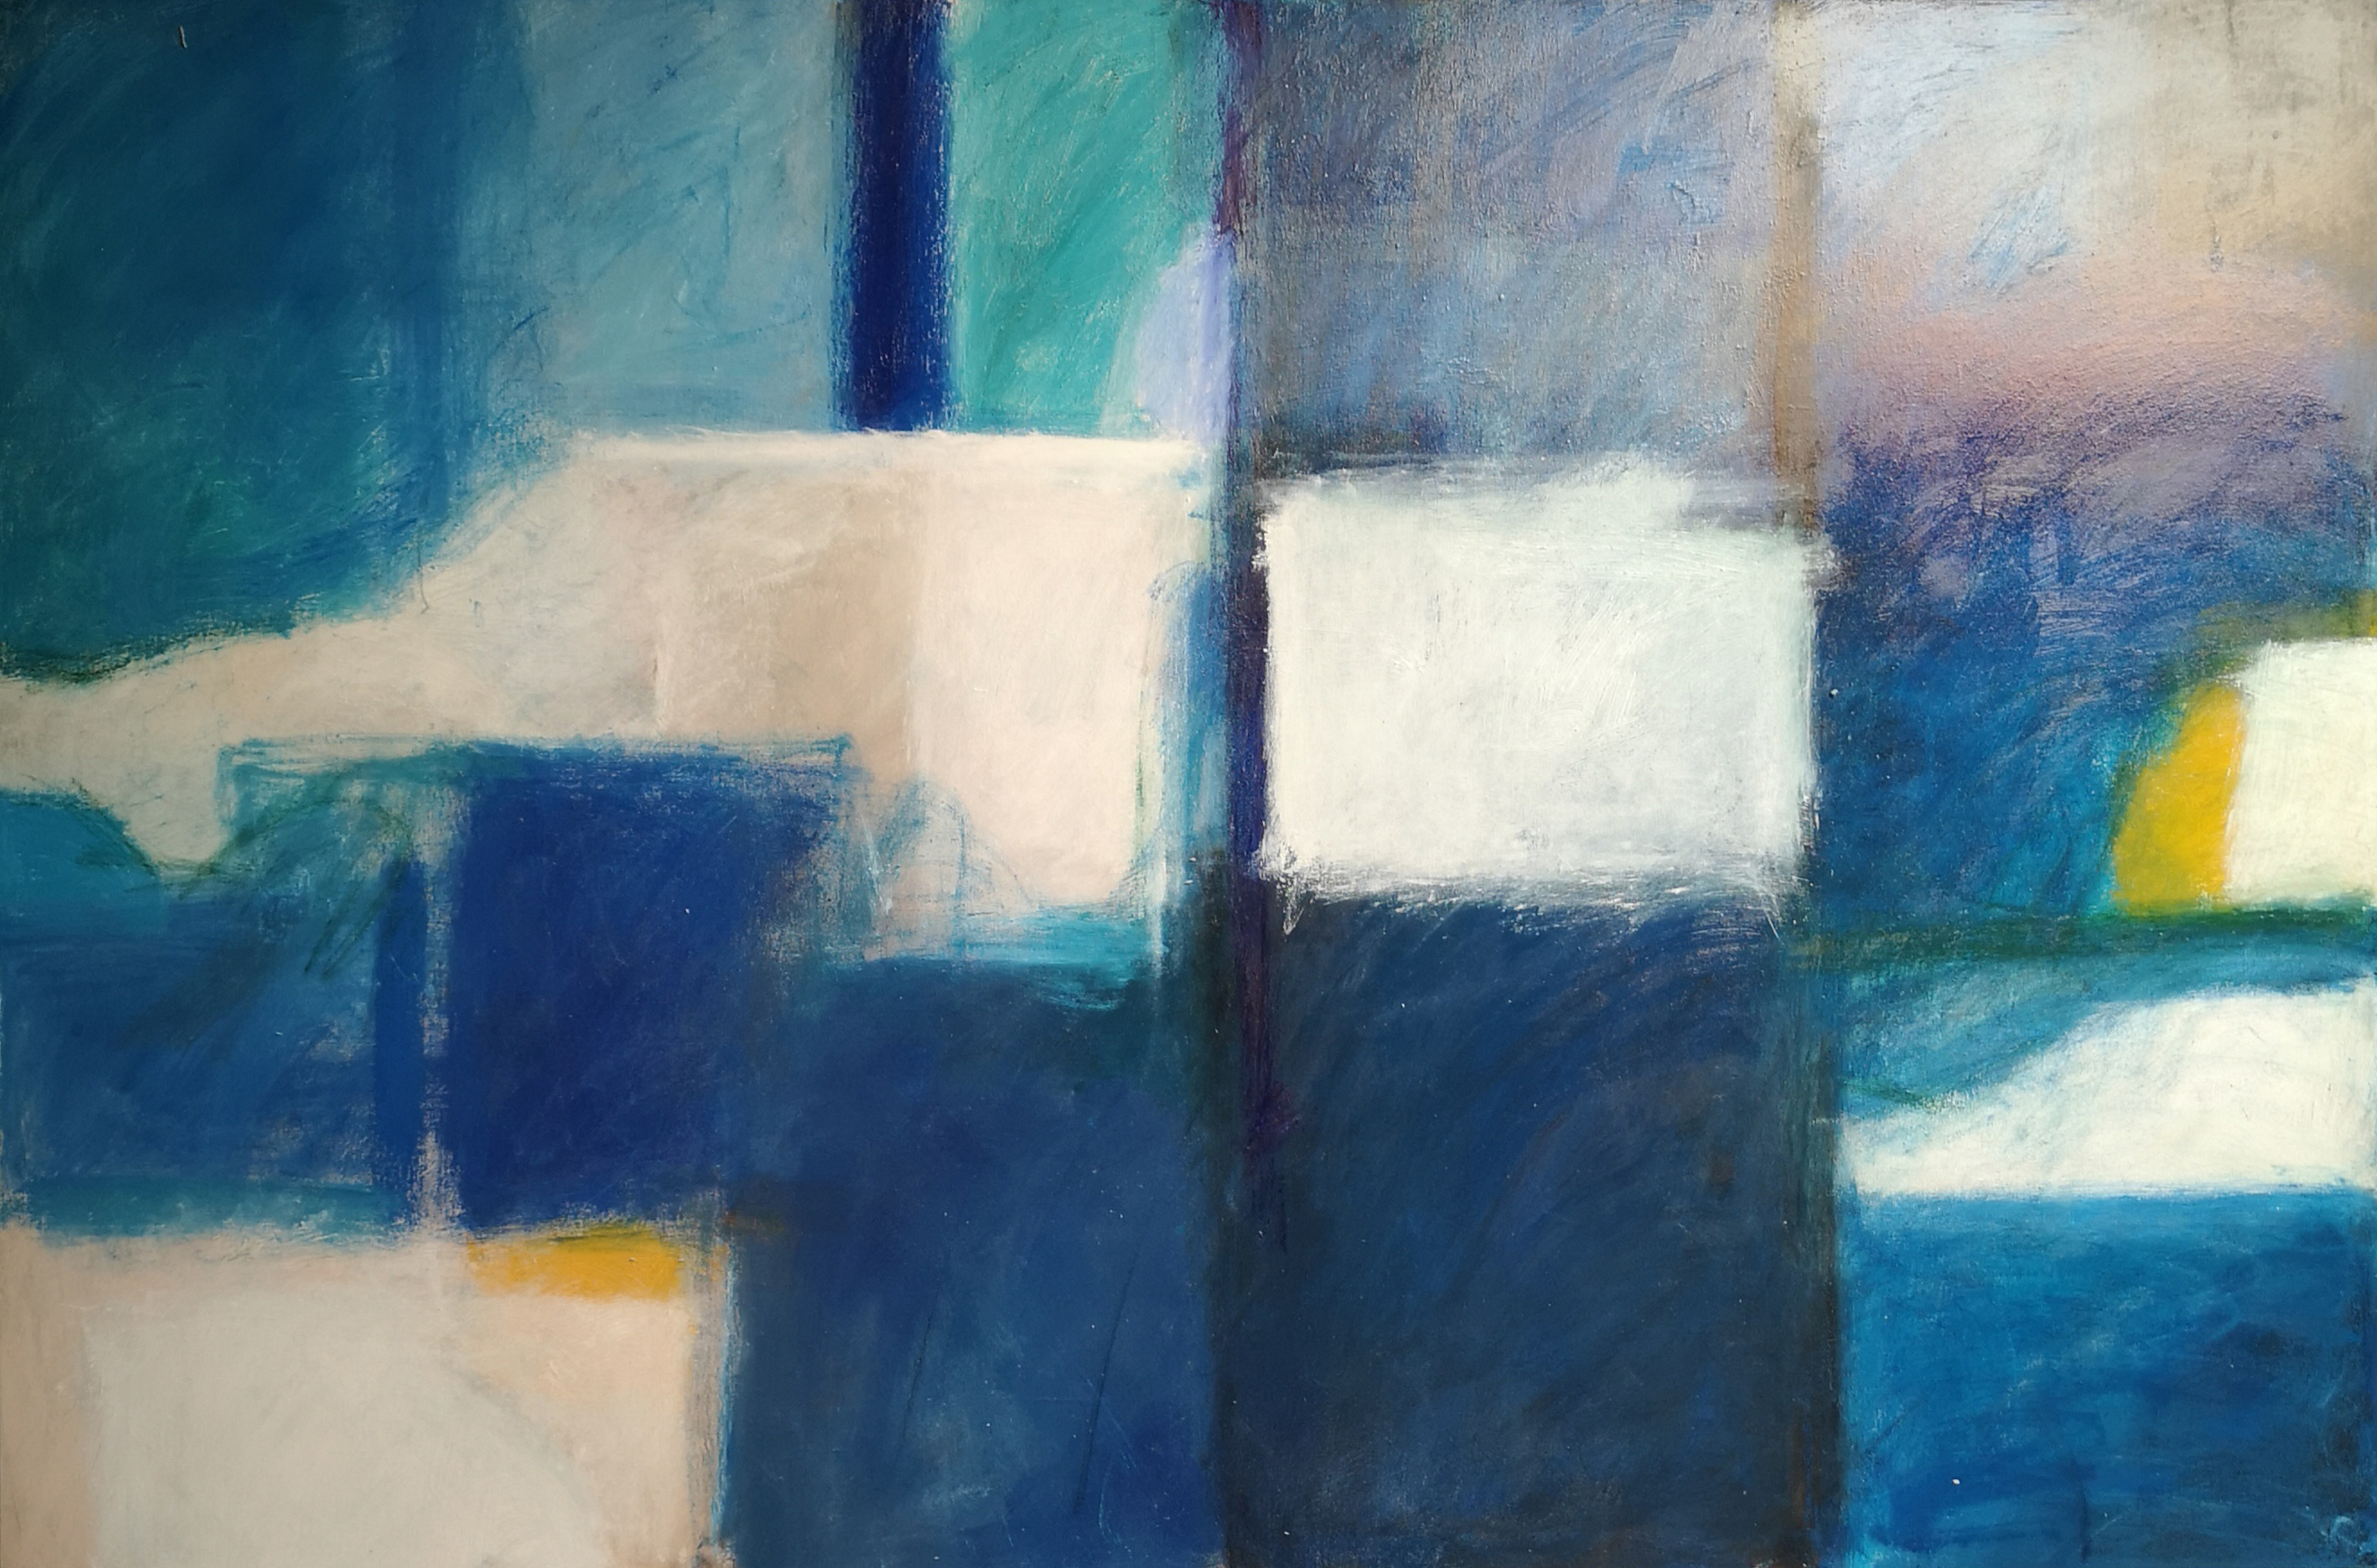 Pietro Cinti - Composizione n° 66 - olio su tela - 100x150 cm - anno 2020